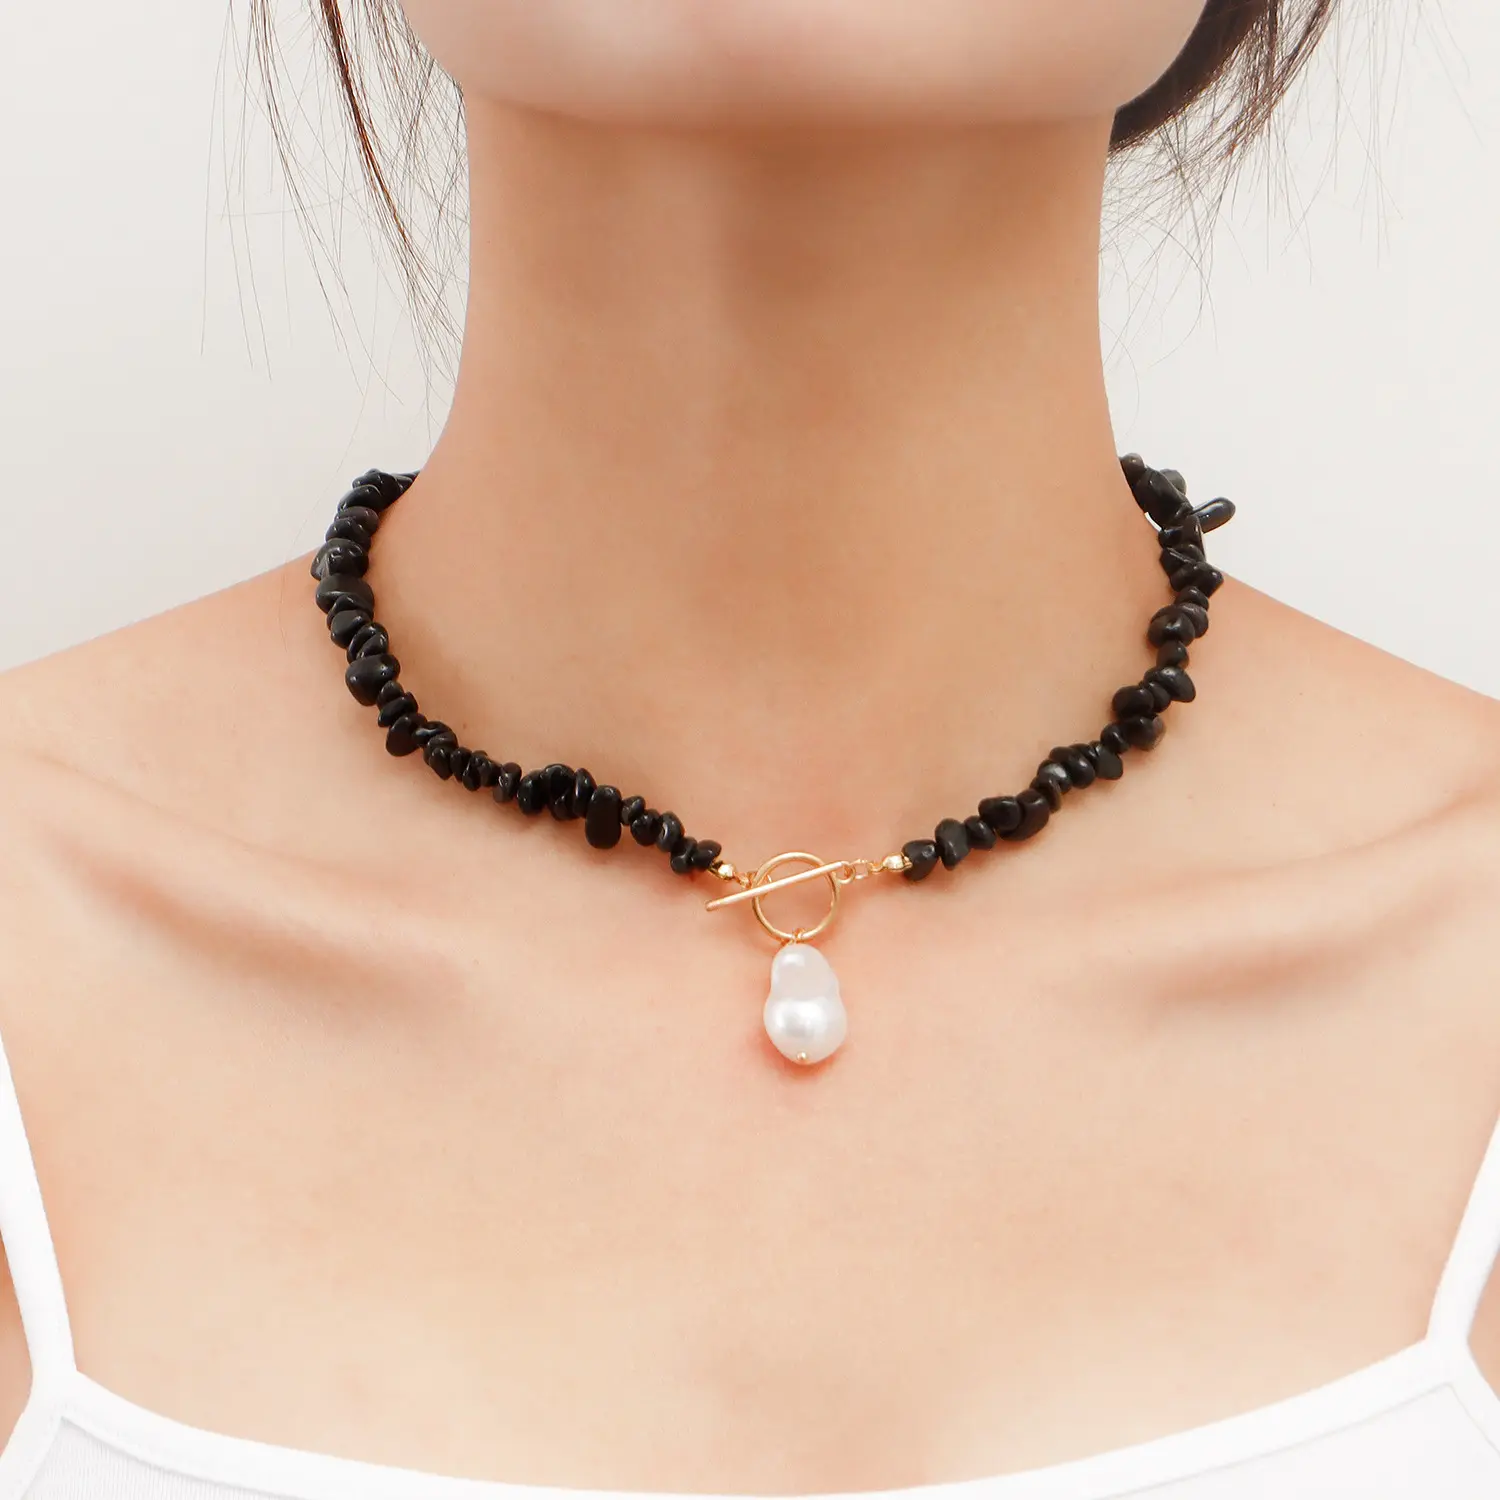 Atacado gemstone jóias pedra natural preto obsidiana pérola OT colar para as mulheres